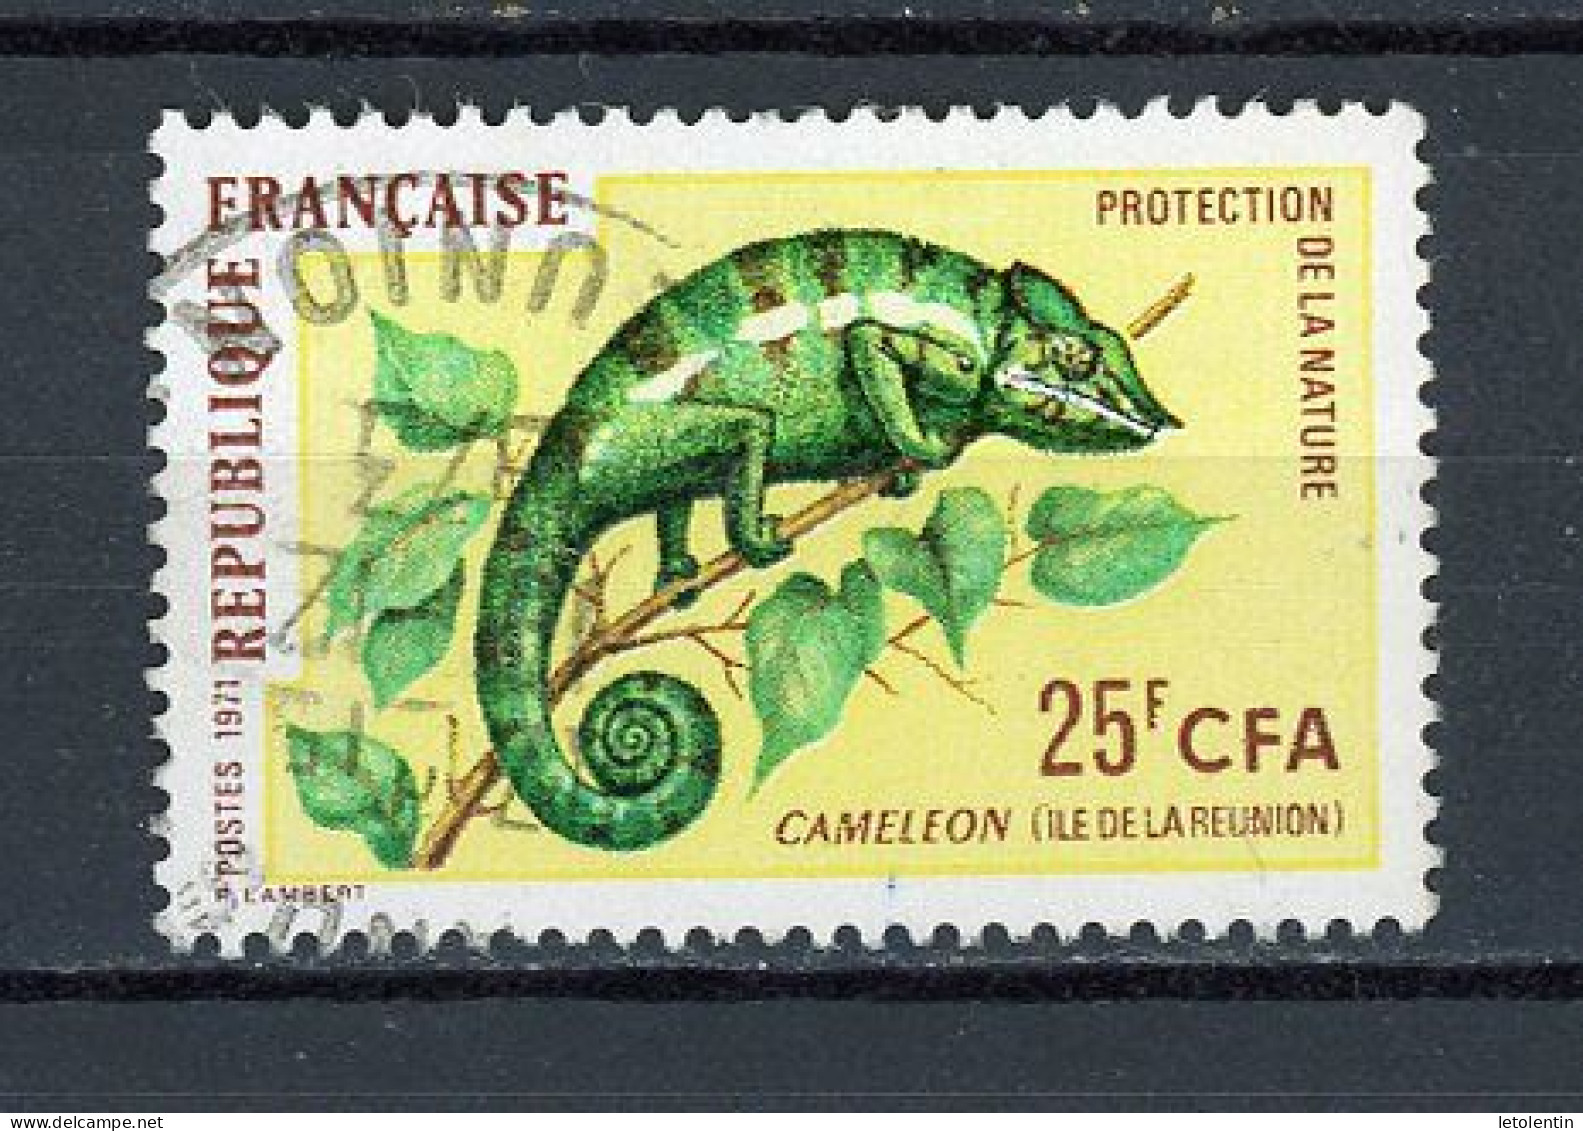 FRANCE SURCHARGÉ CFA - N° Yvert 399 Obli. - Used Stamps